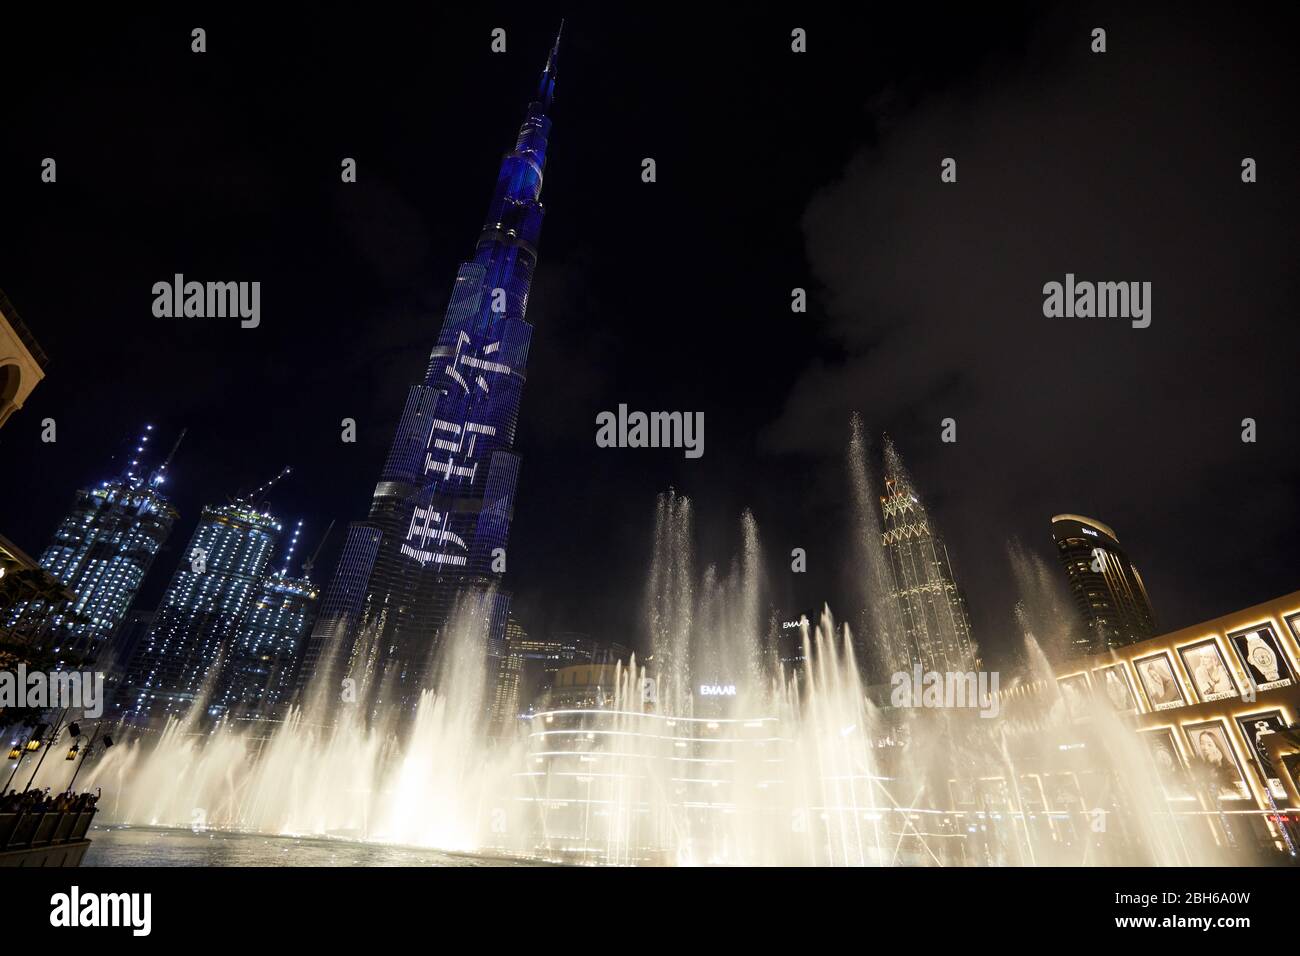 DUBAI, UNITED ARAB EMIRATES - NOVEMBER 21, 2019: Burj Khalifa skyscraper illuminated at night and Fountain Show in front of Dubai Mall Stock Photo